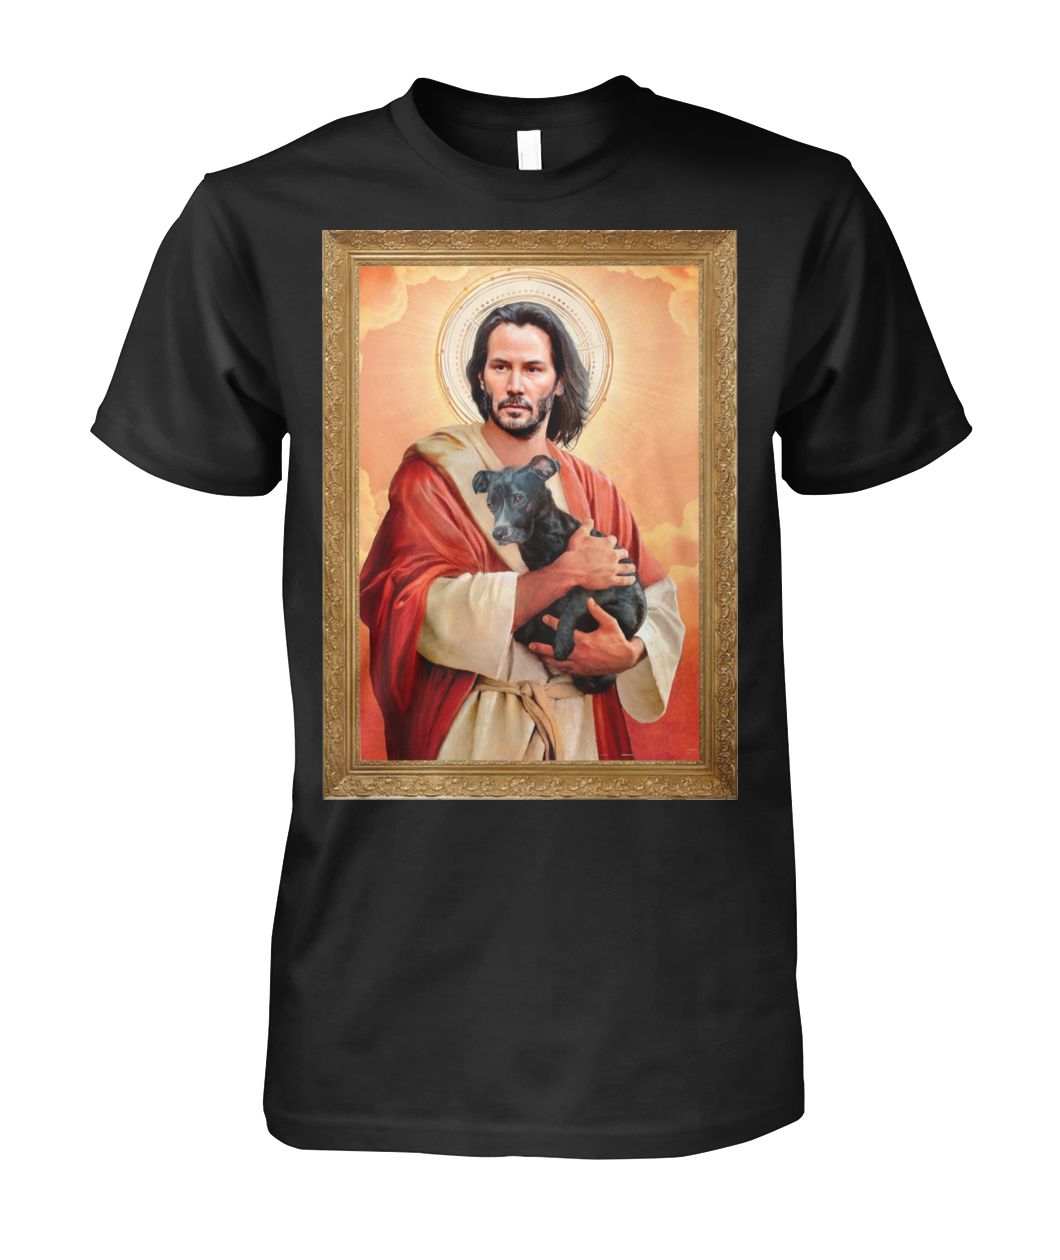 Saint Keanu Reeves T-Shirt - gopowear.com